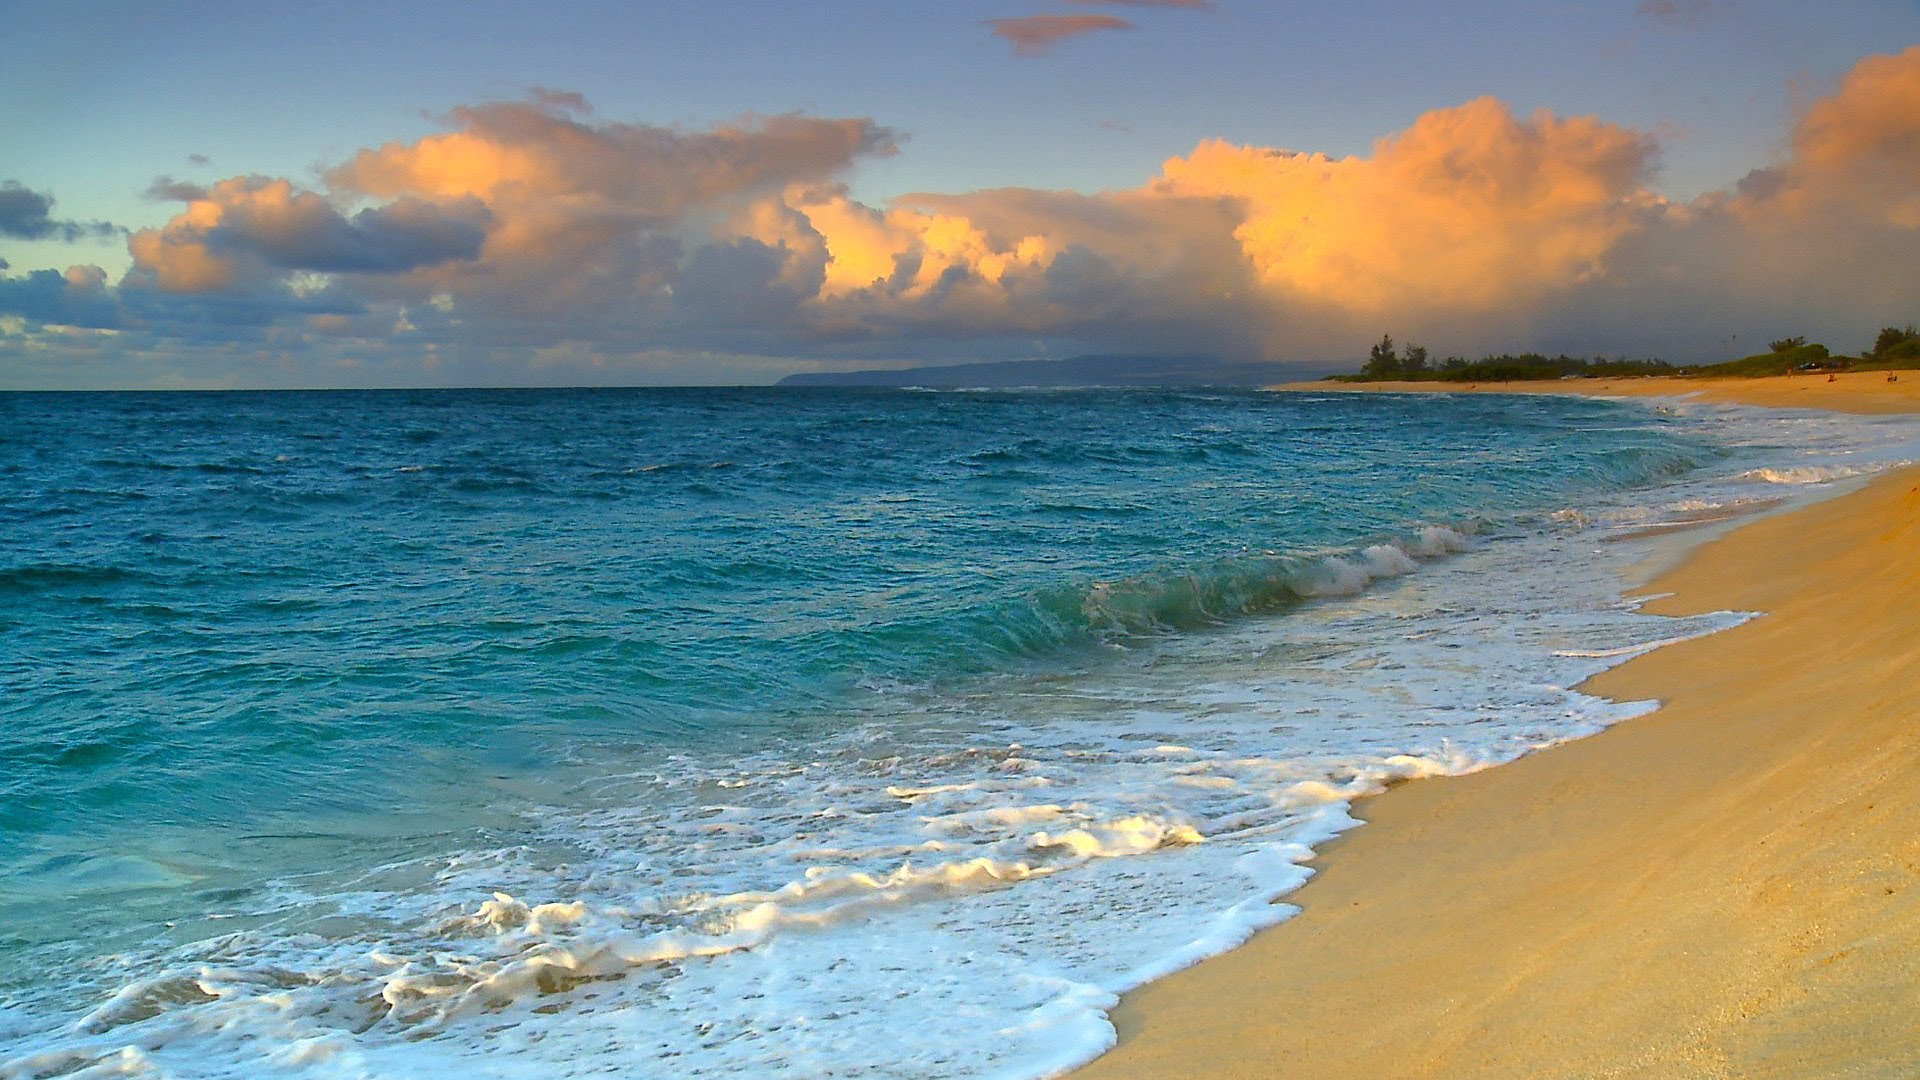 Beautiful Places To See- Hawaii Sea Beach - YouTube